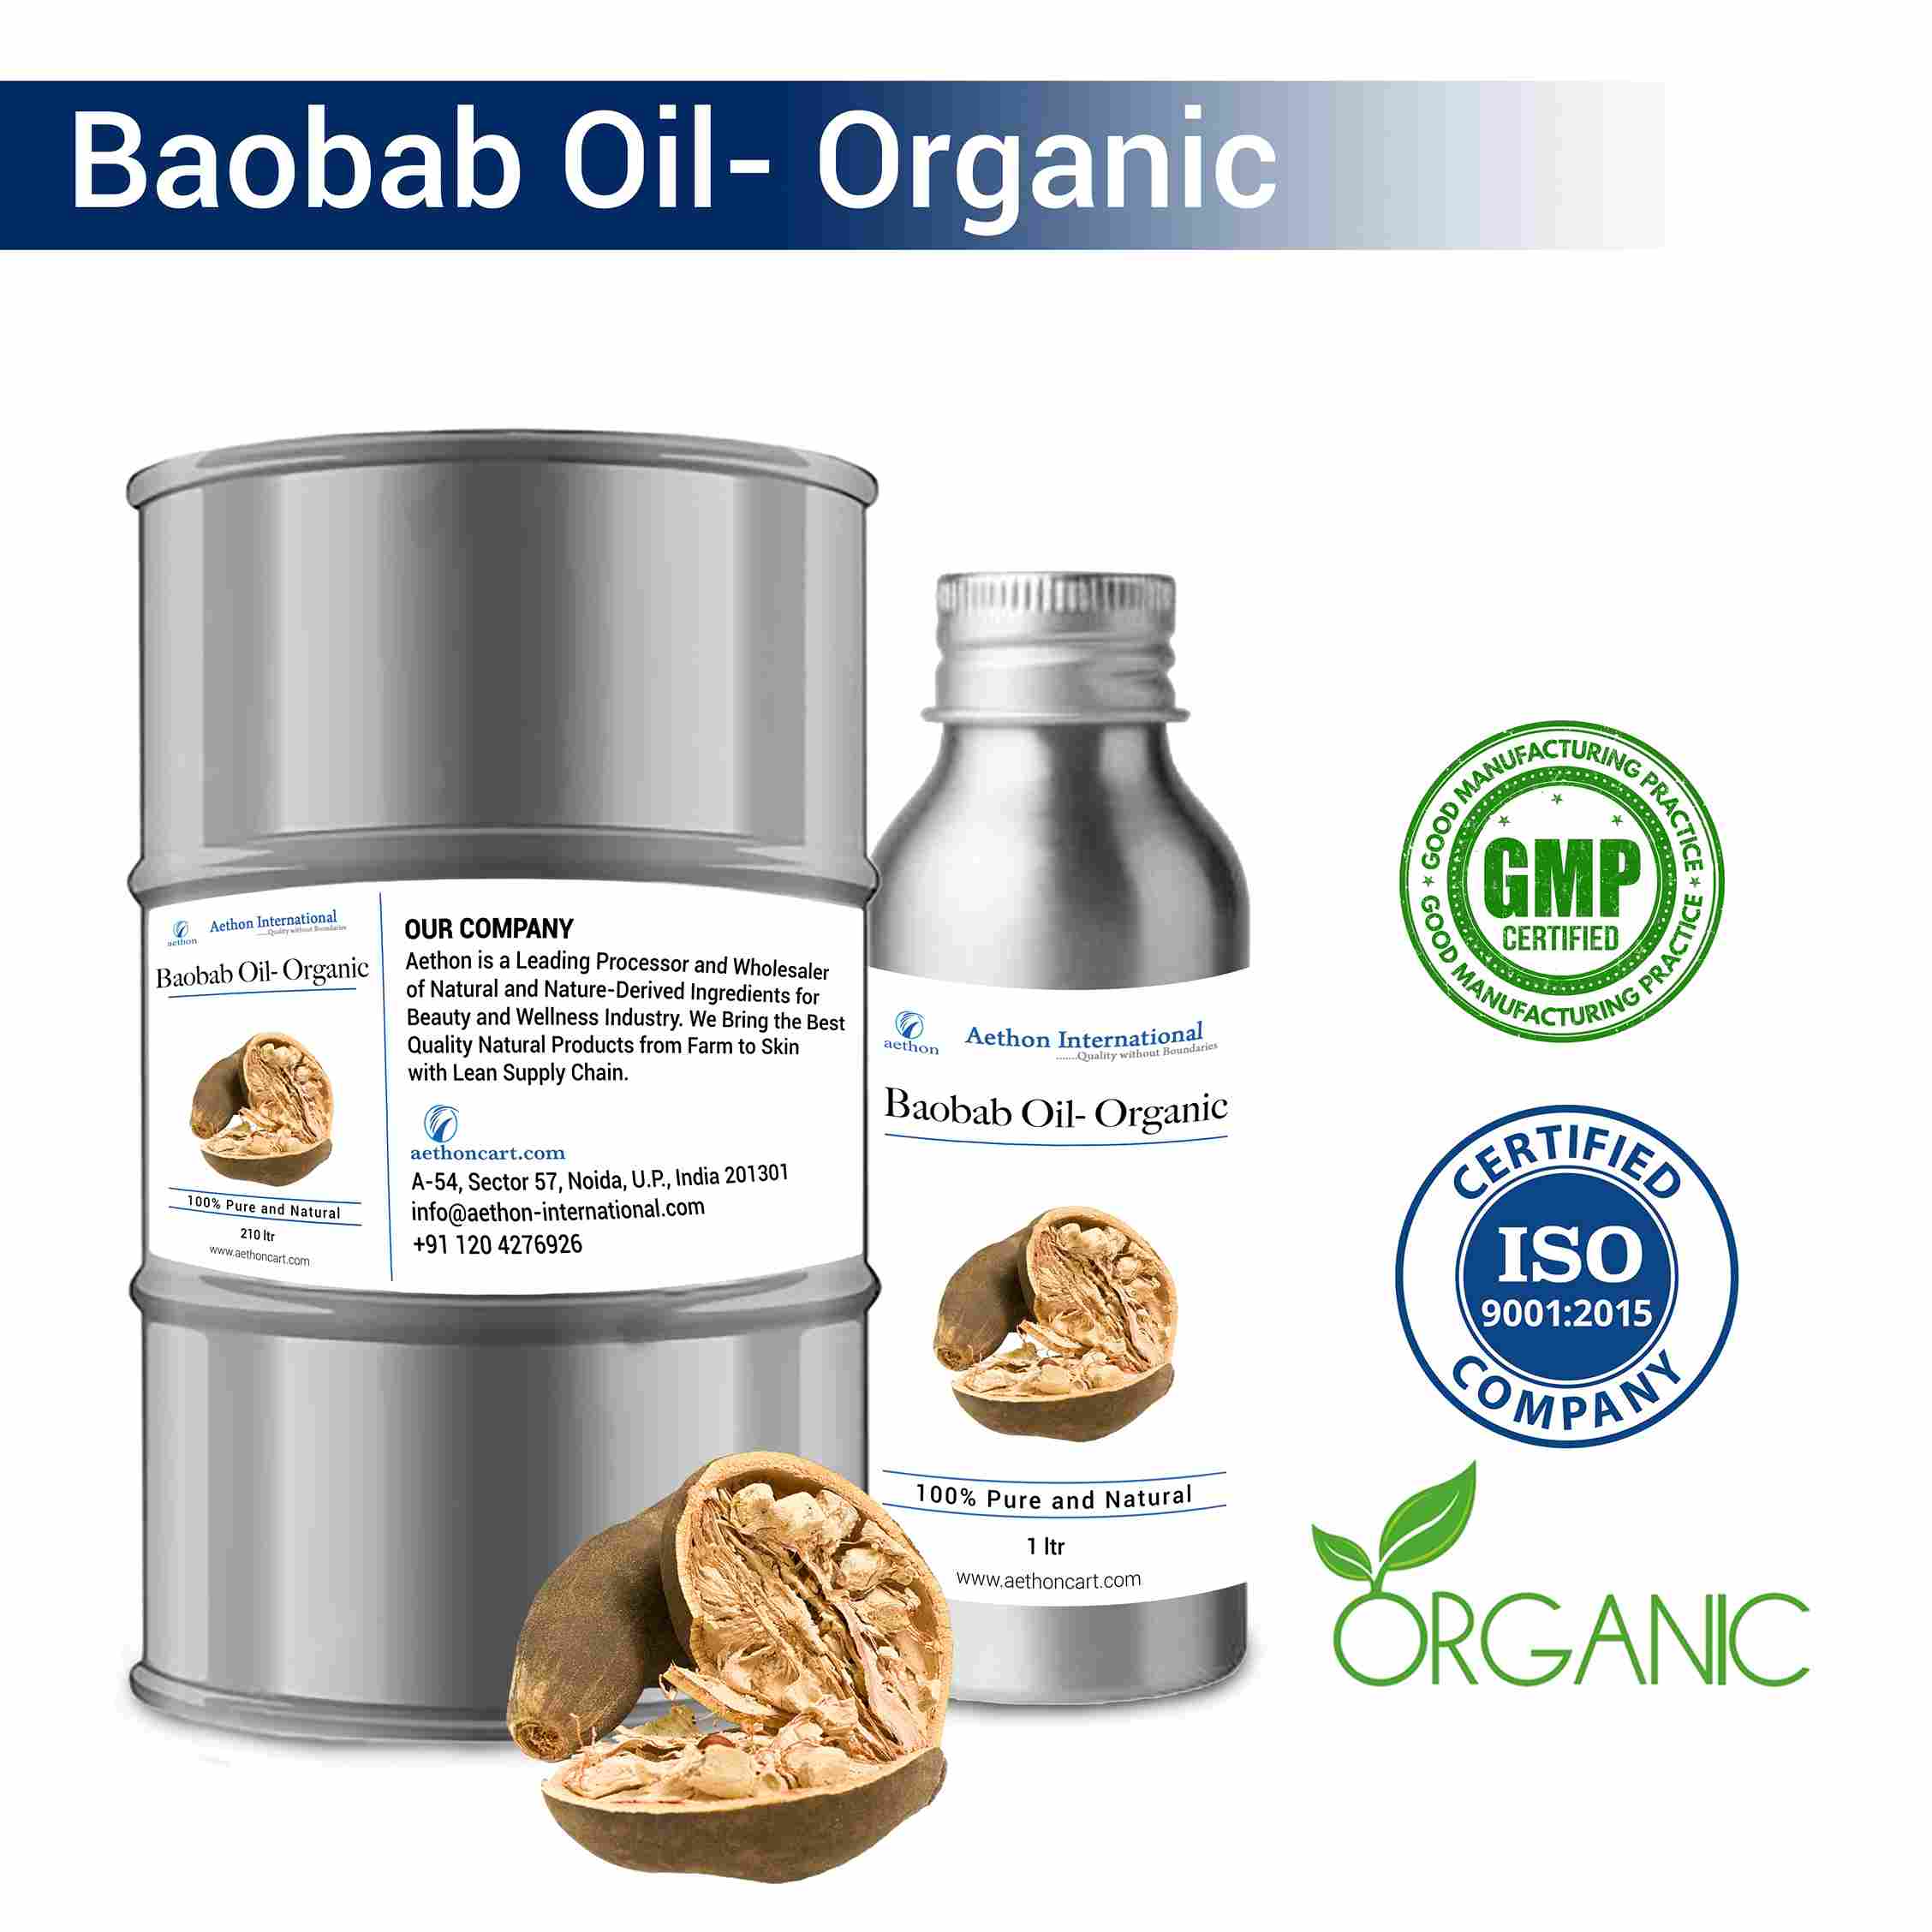 Baobab Oil-Organic